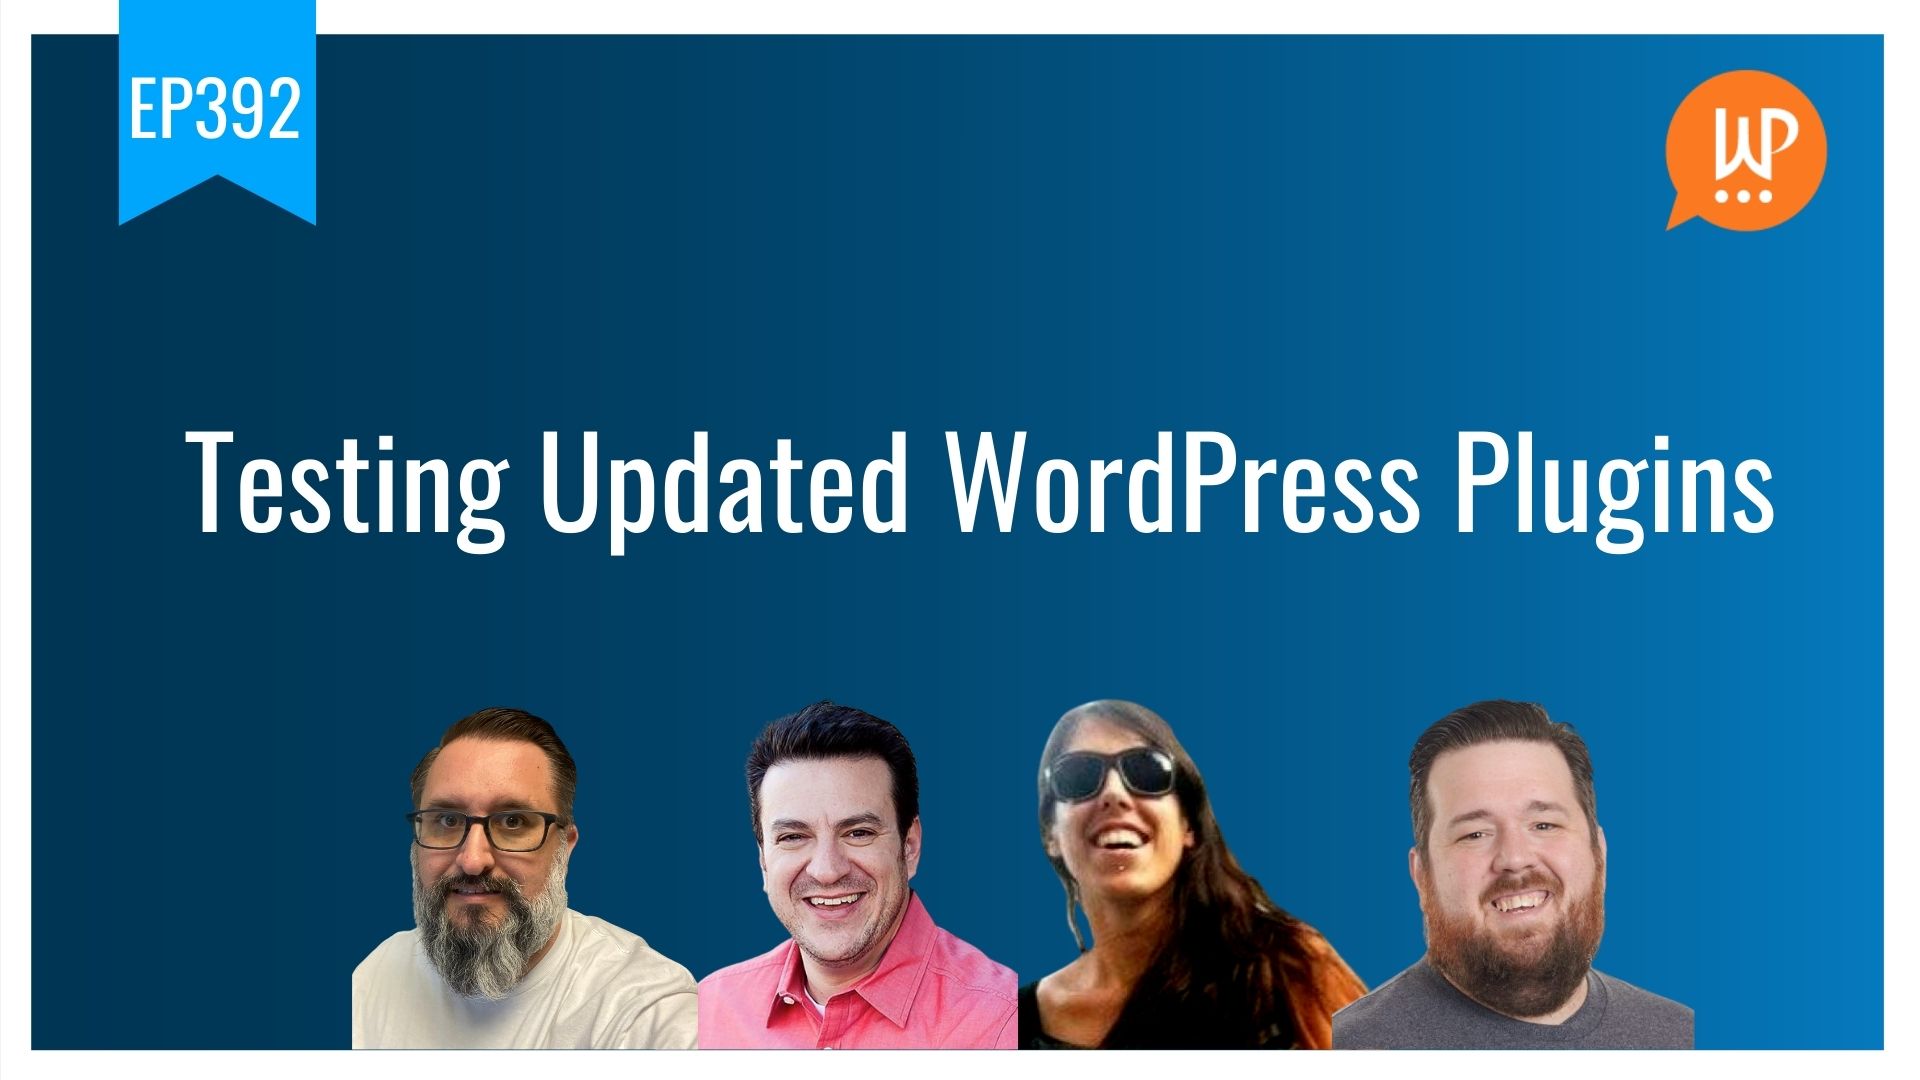 EP392 – Testing Updated WordPress Plugins